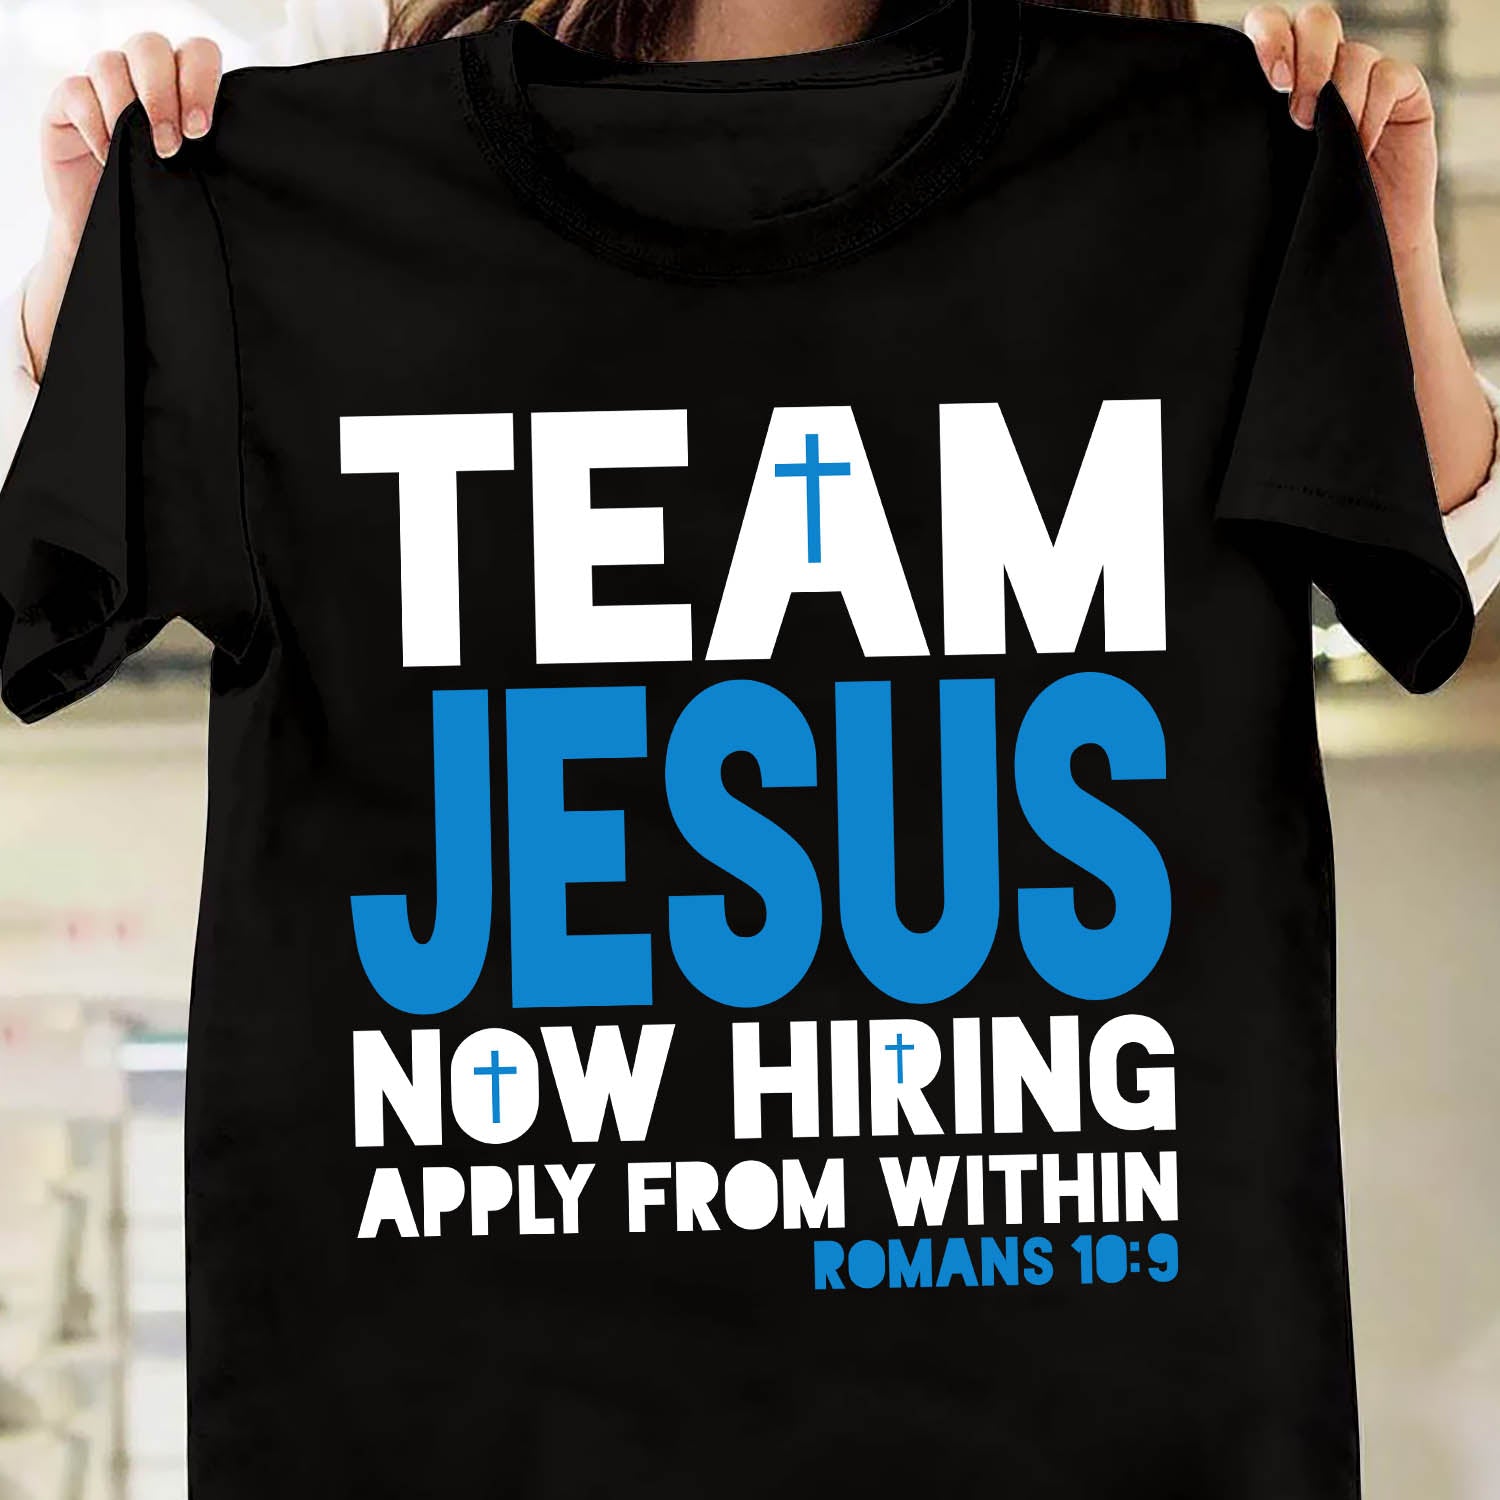 Team Jesus now hiring, apply from within - Jesus Black Apparel